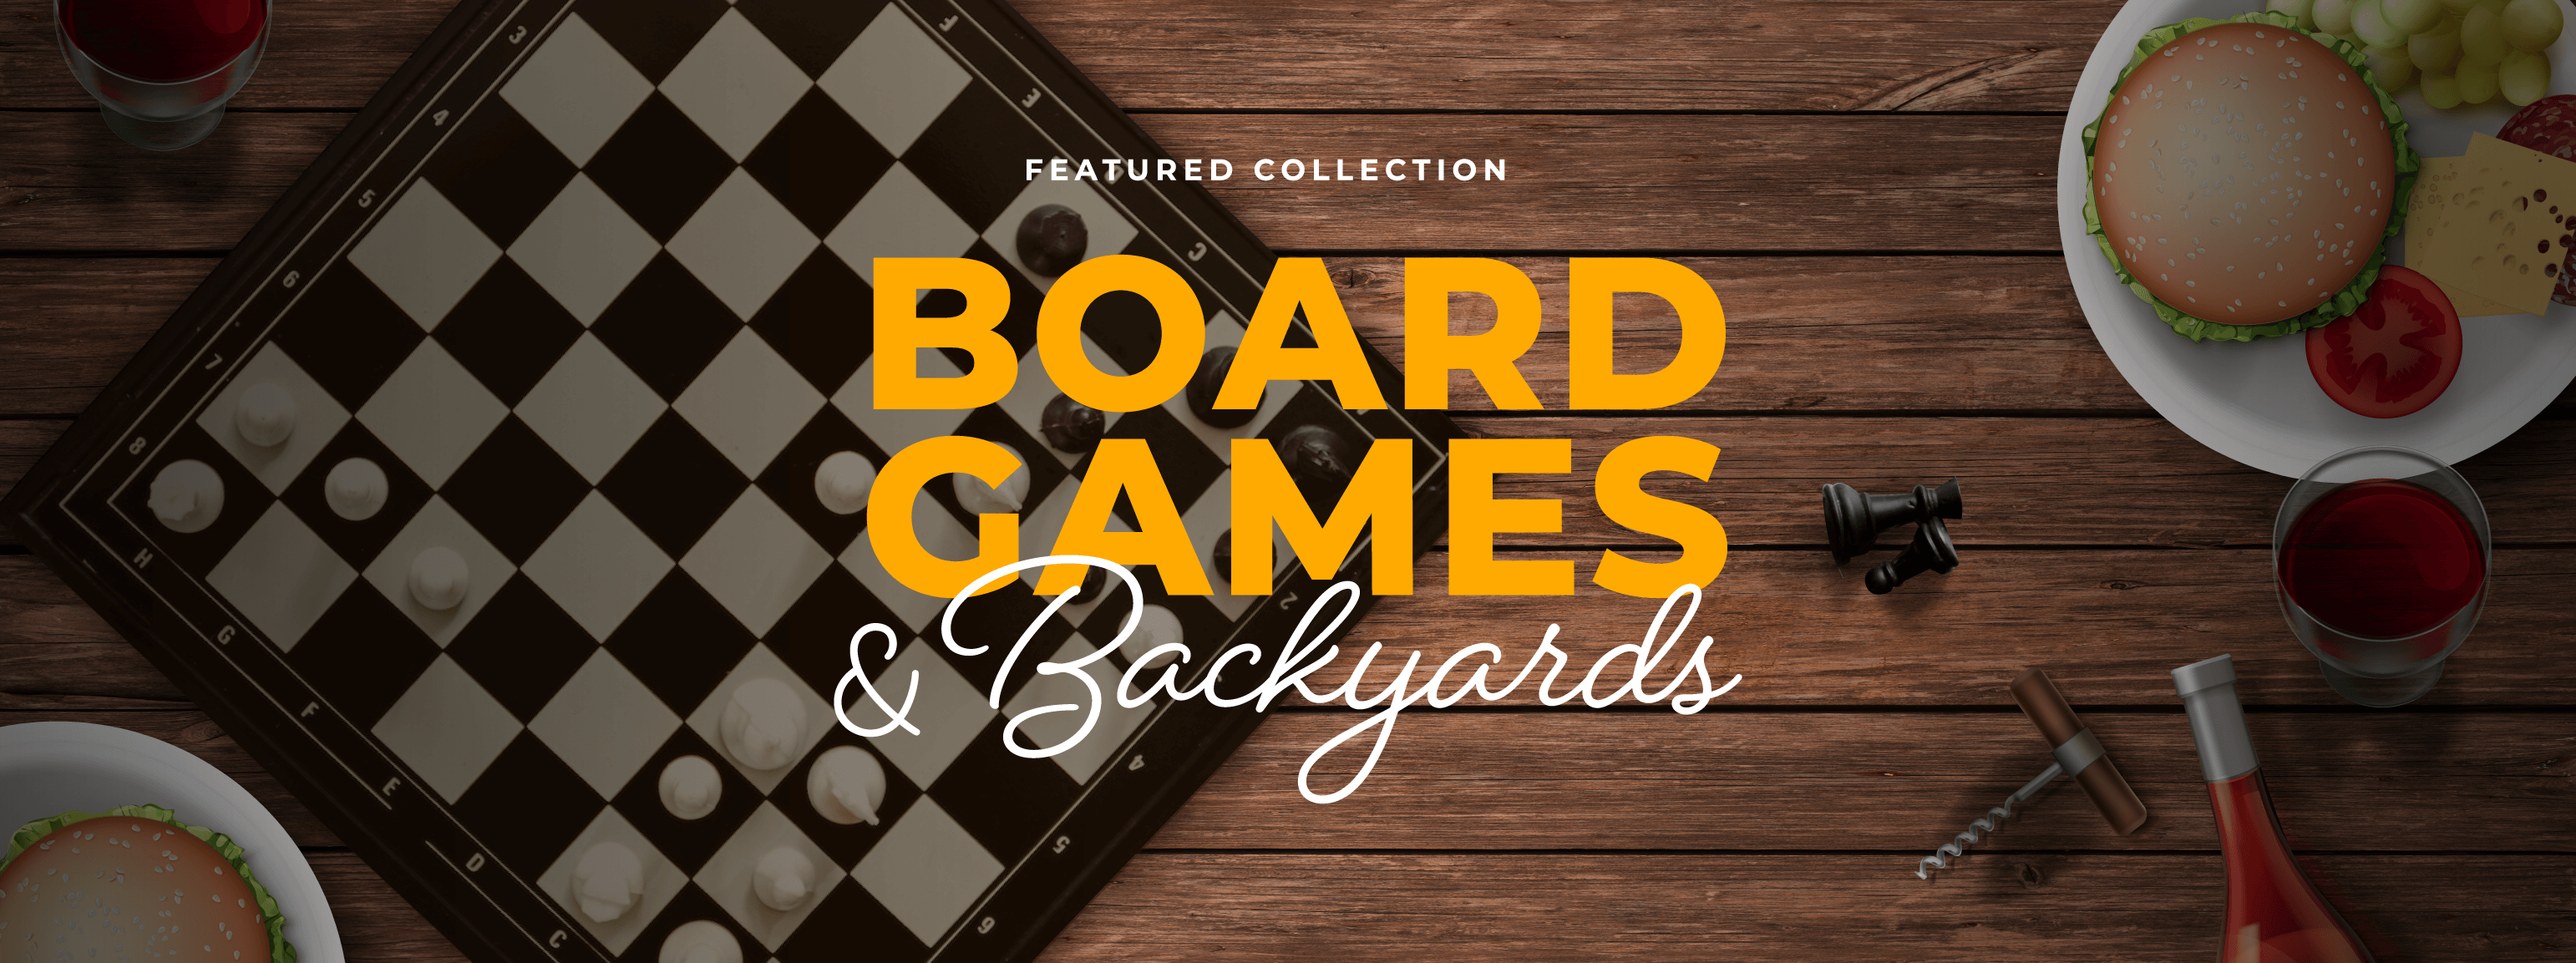 Board Games & Backyards